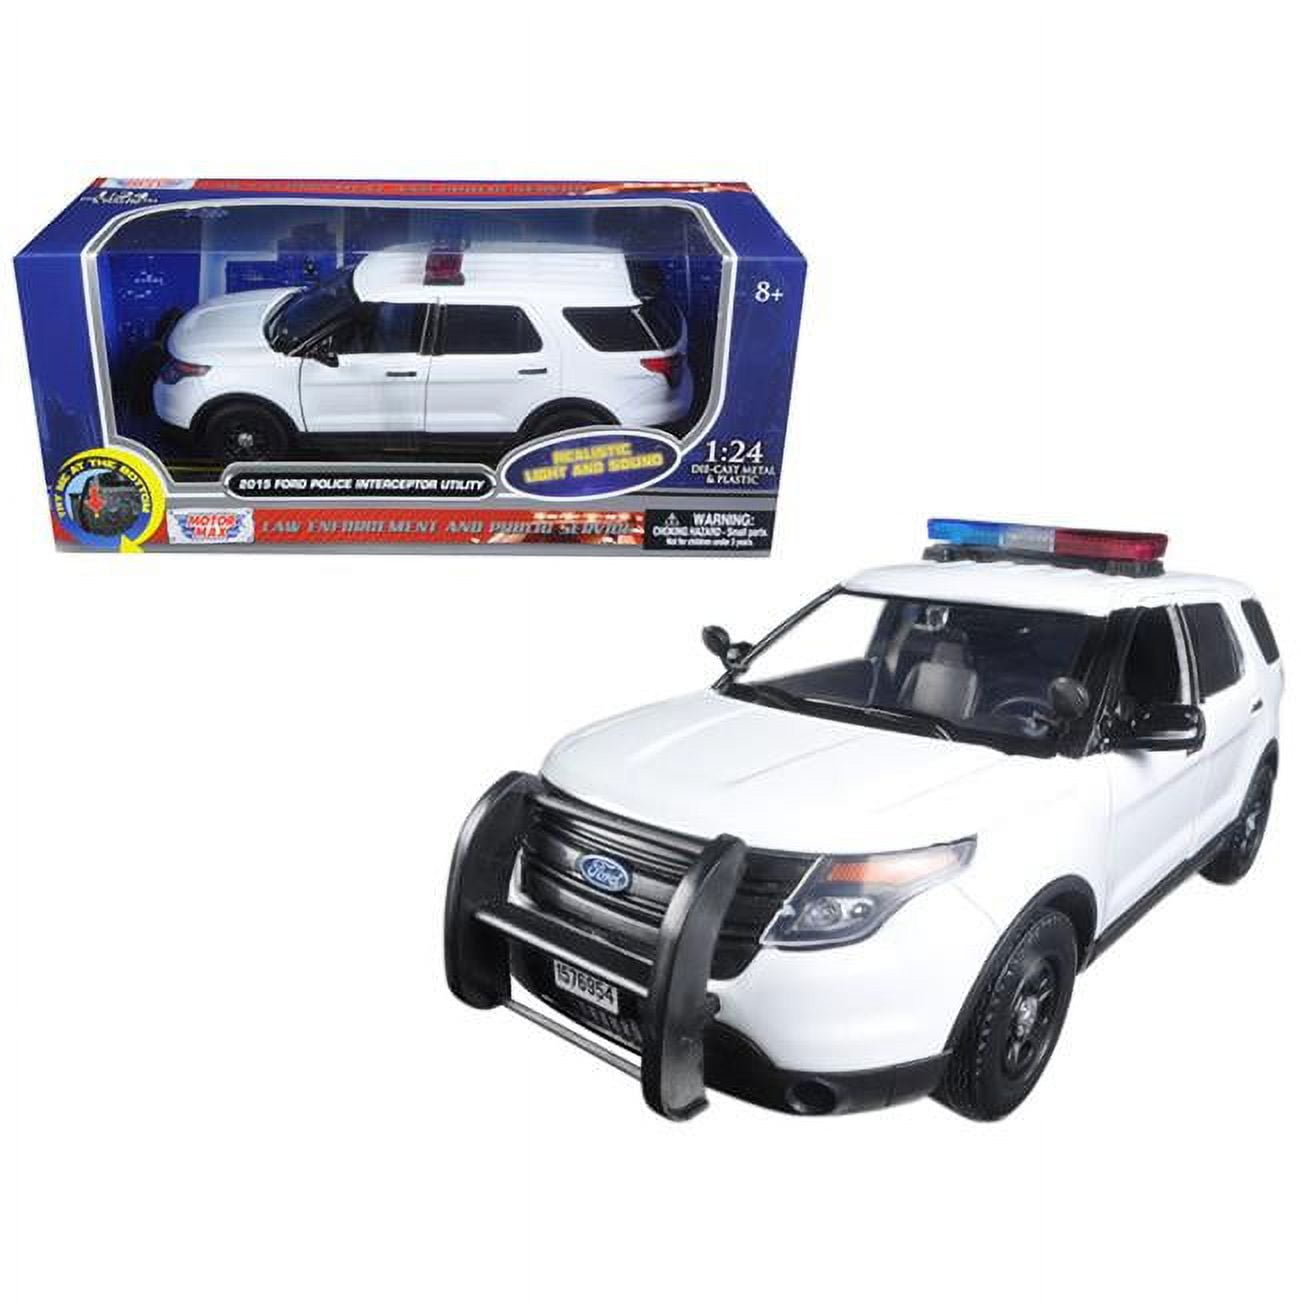 79535 1-24 2015 Ford Police Interceptor Utility Diecast Model Car With Light Bar & Sound - White